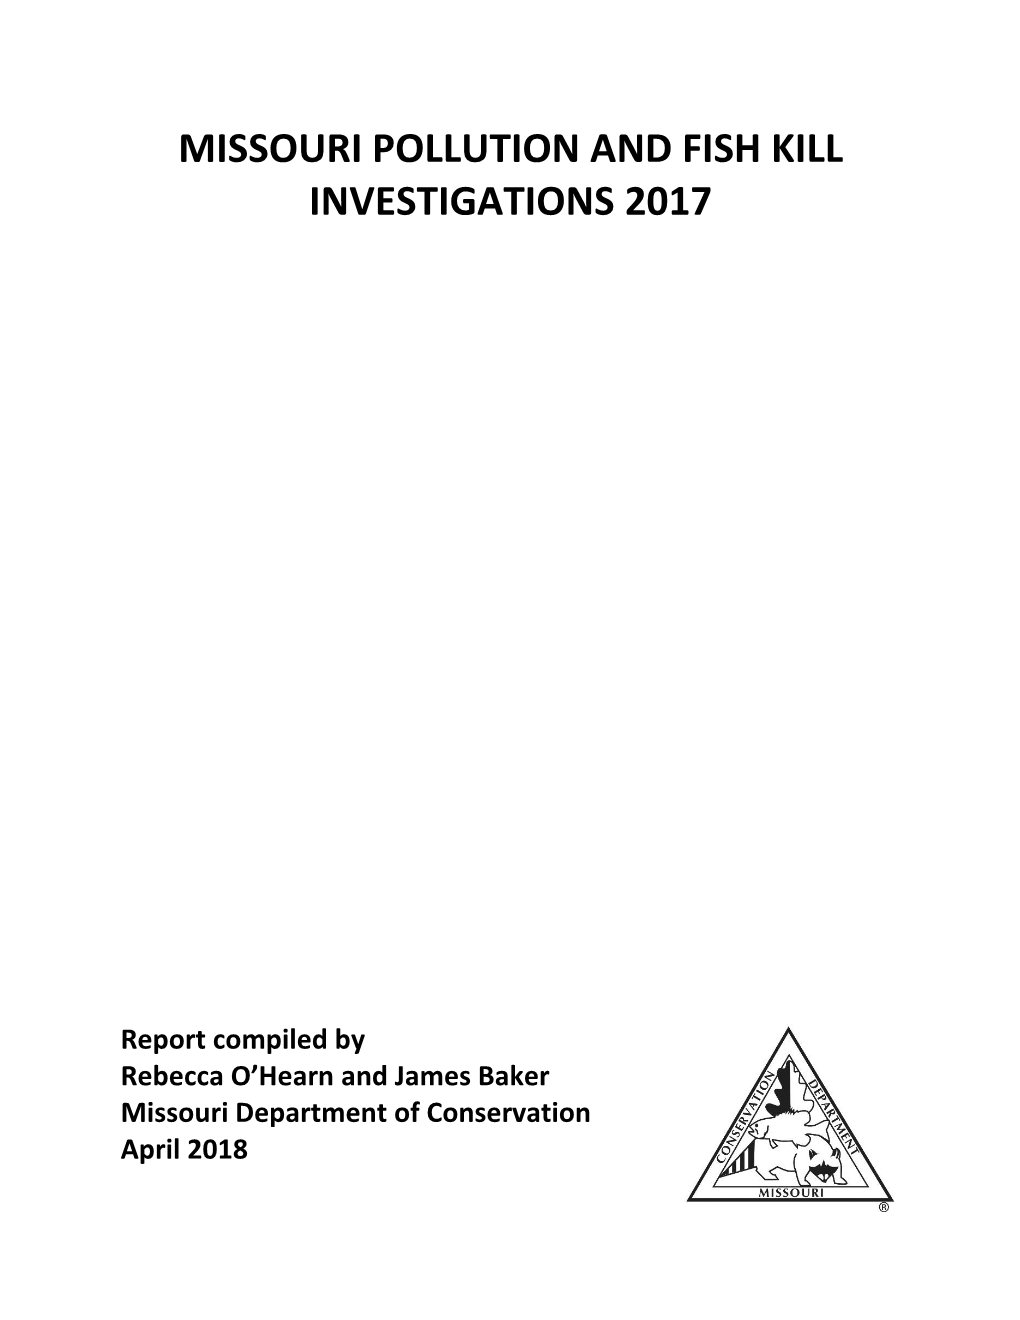 Missouri Pollution and Fish Kill Investigations 2017